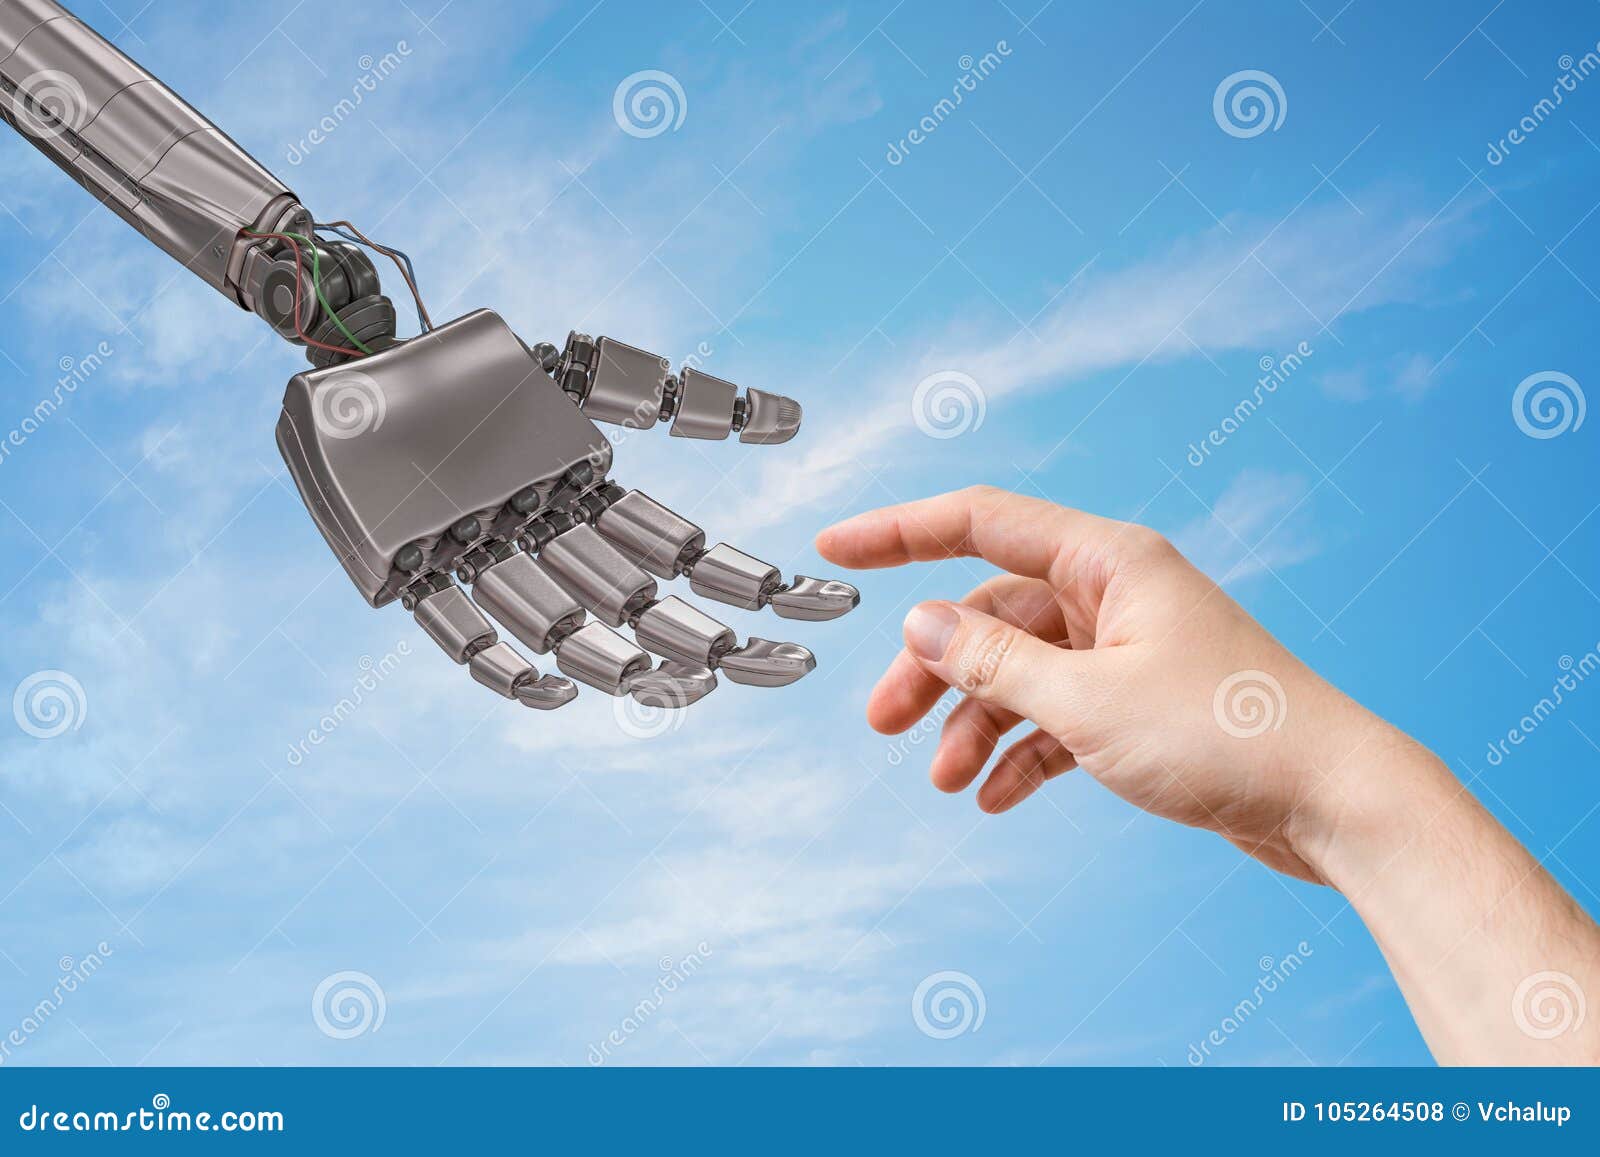 Robot Hand Touching Virtual Screen Control Robotics Auto Arms Stock